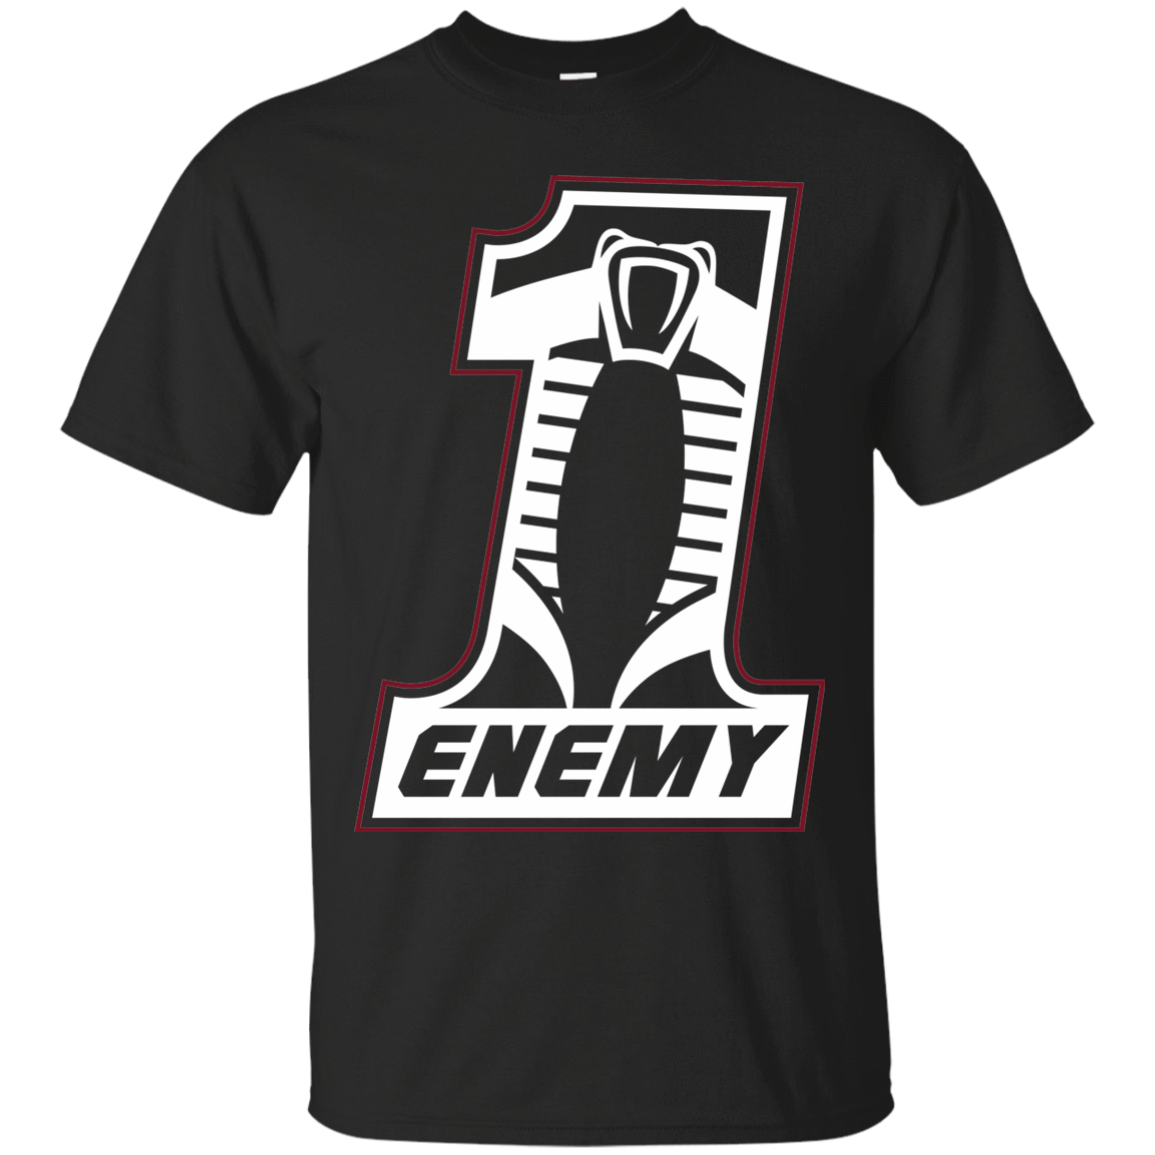 T-Shirts Black / S Number 1 Enemy T-Shirt